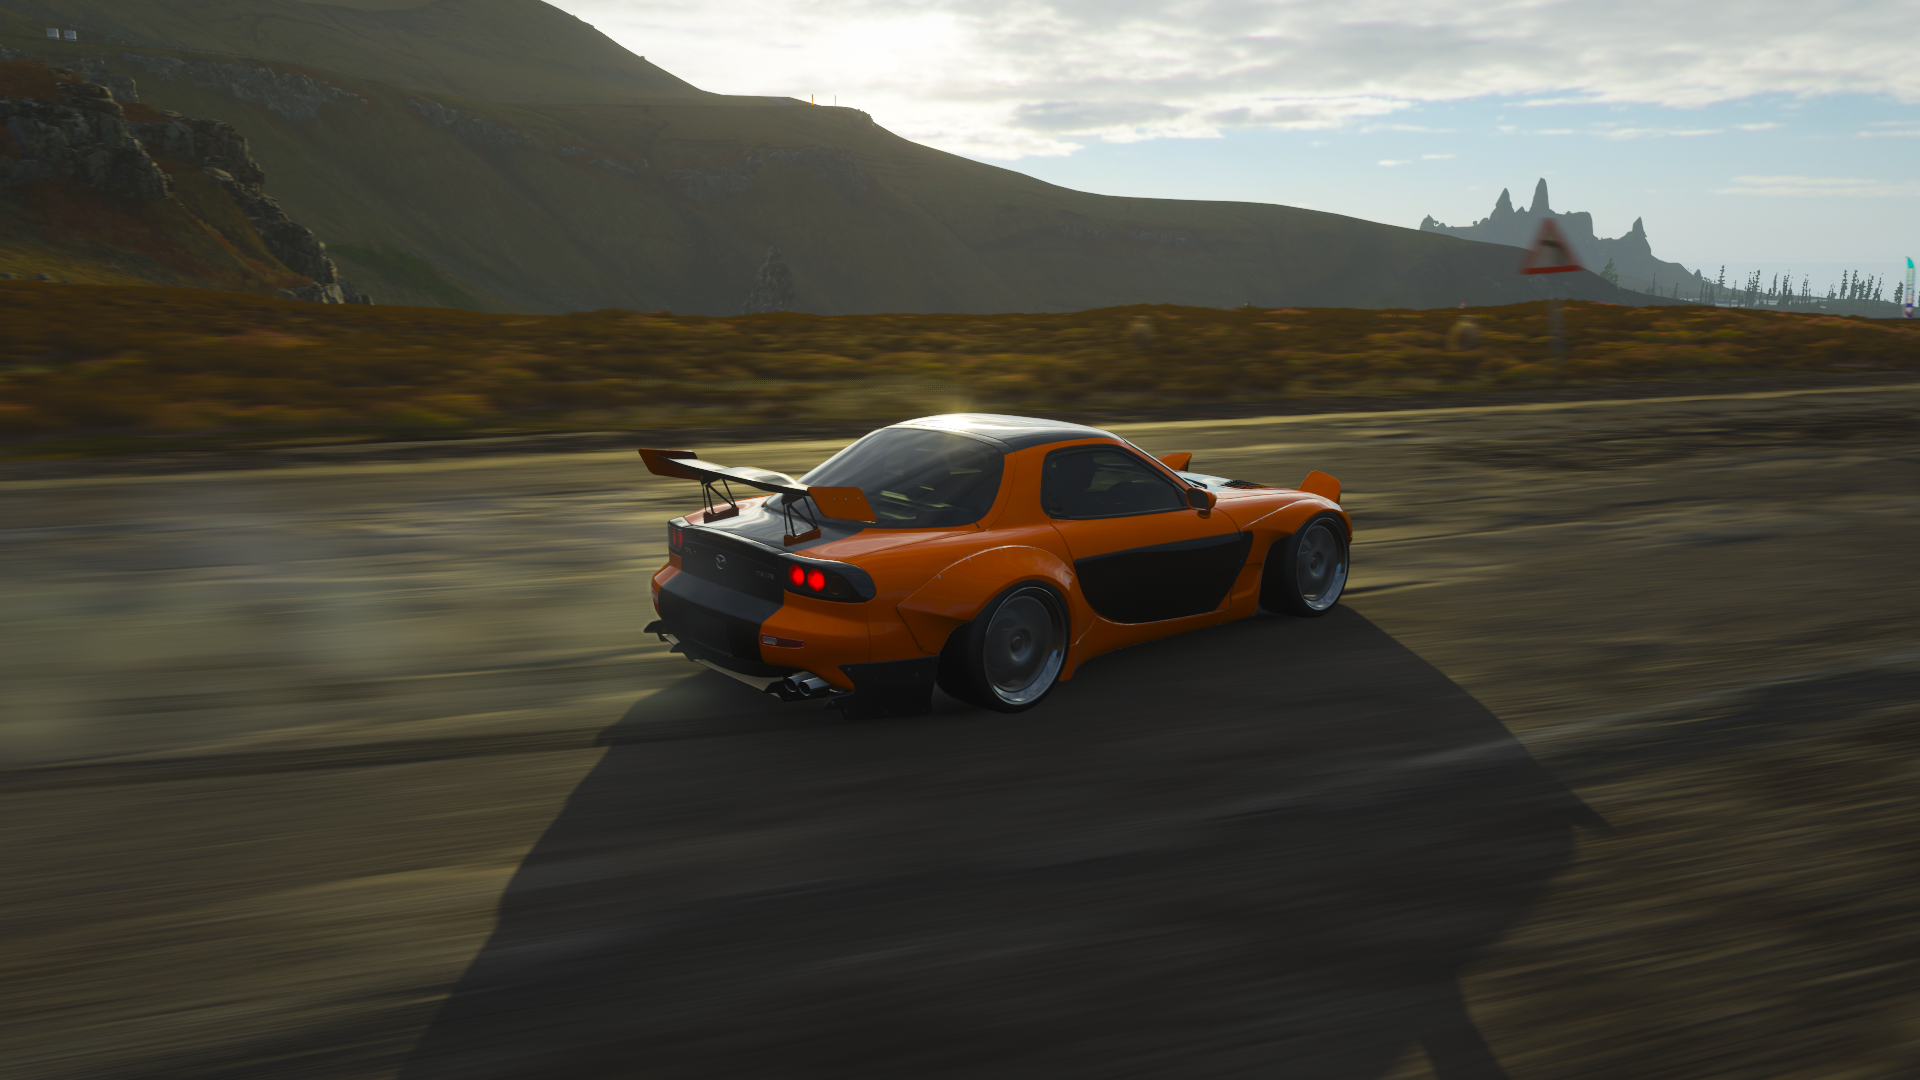 General 1920x1080 Forza Horizon 4 Mazda Mazda RX-7 sunset landscape orange sports car pop-up headlights drift car video games